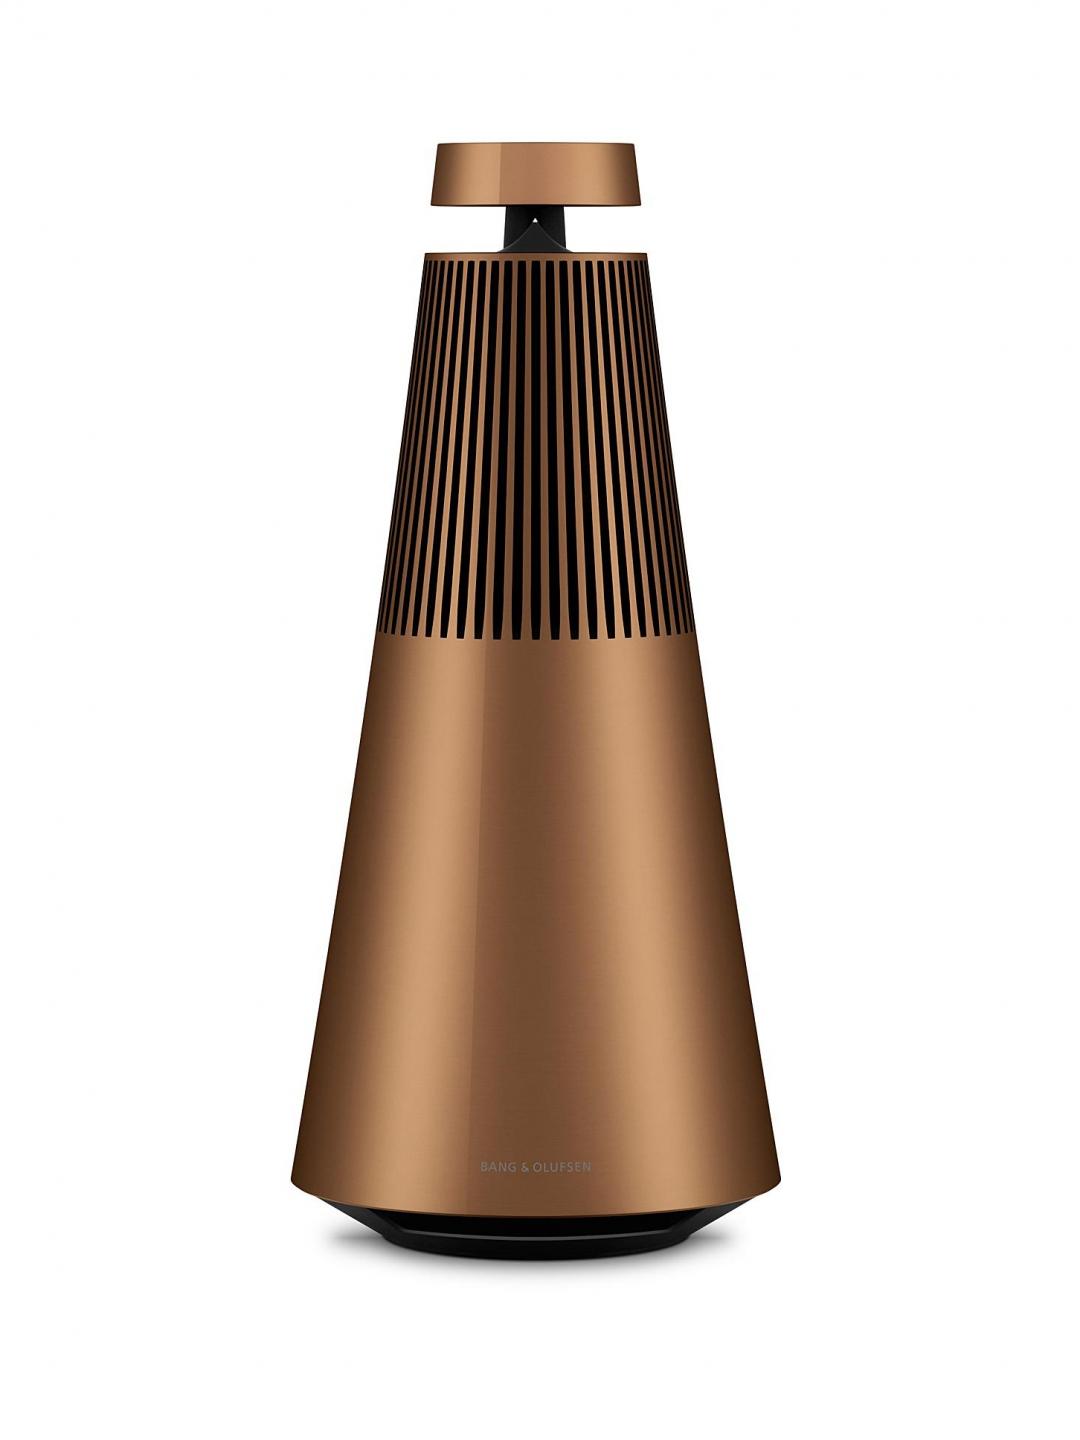 The Beosound 2 Wireless Sound System in Bronze Tone